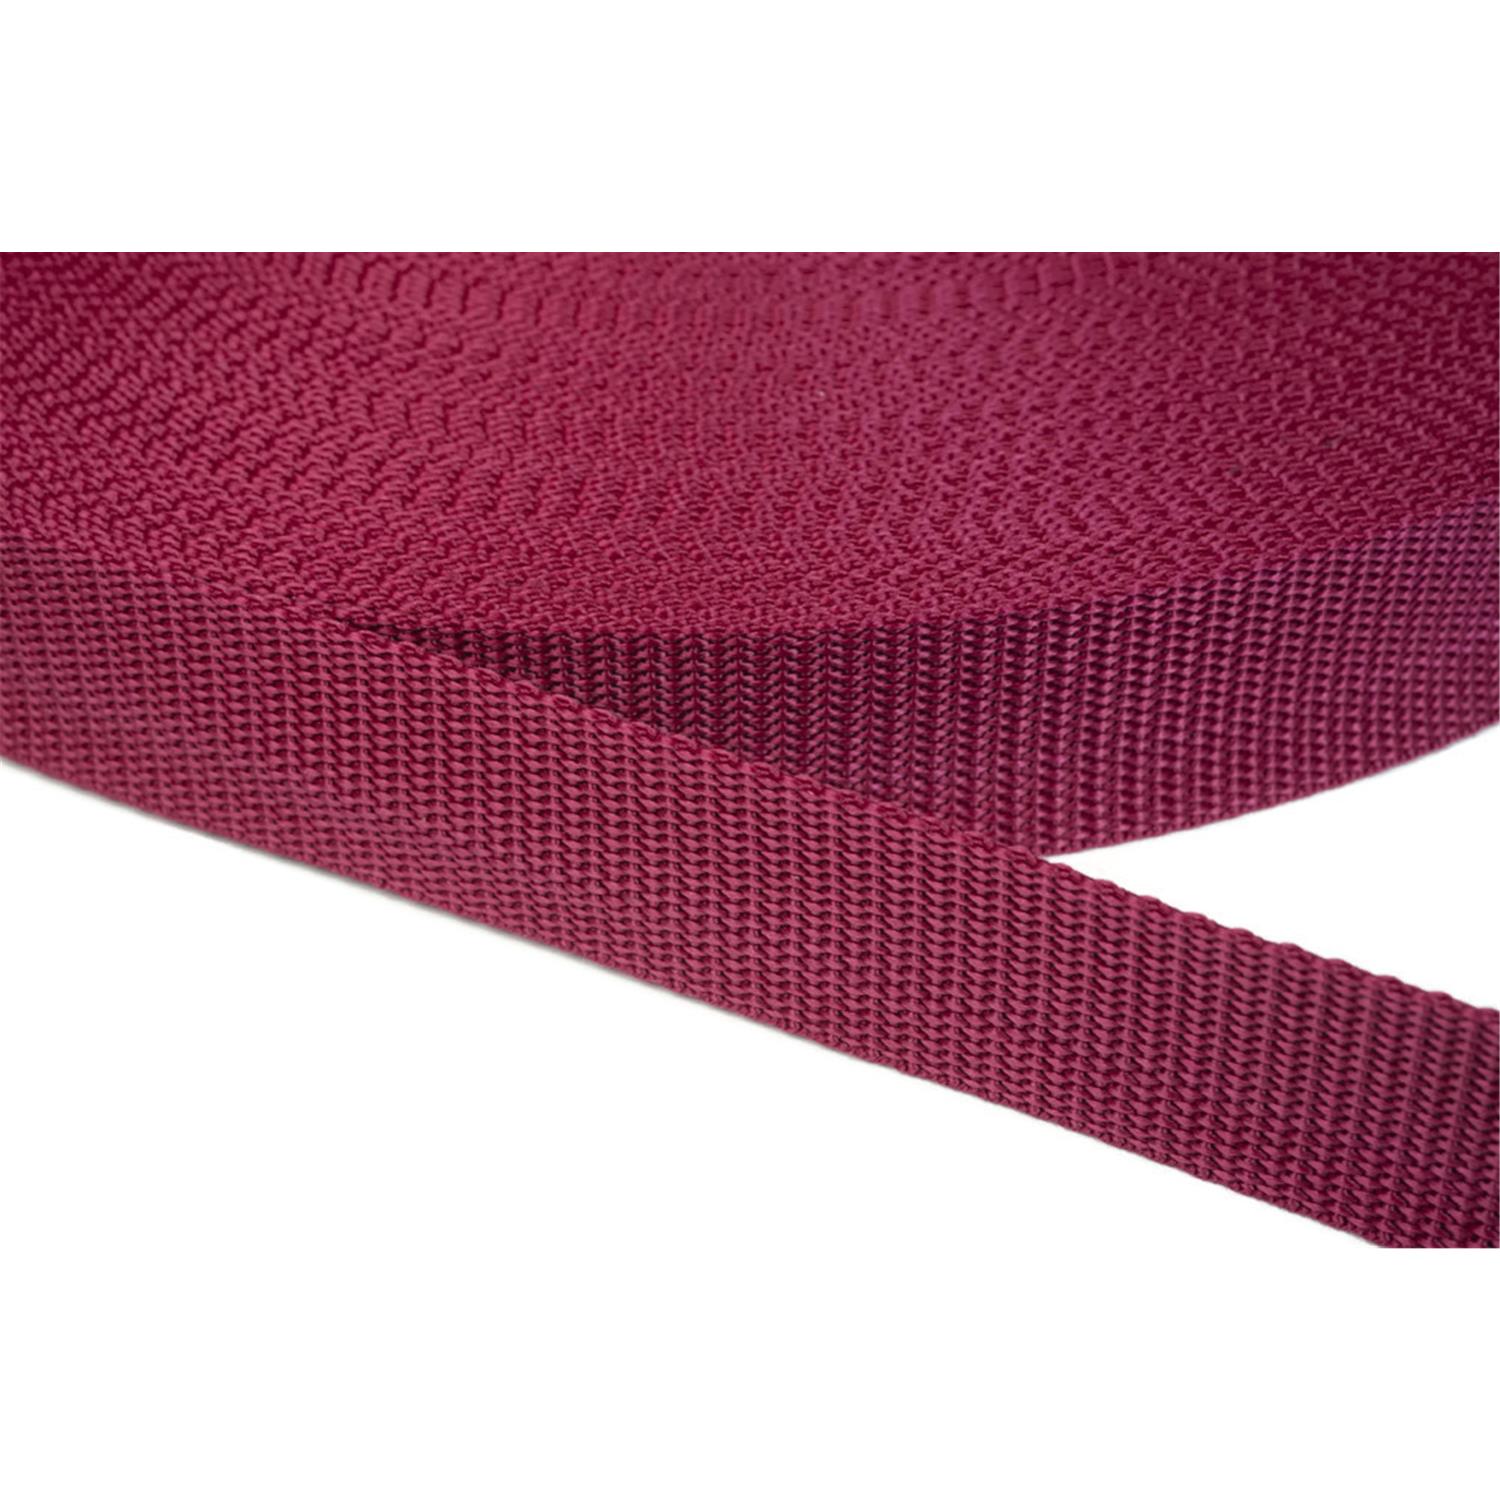 Gurtband 30mm breit aus Polypropylen in 41 Farben 21 - dunkelrot 12 Meter